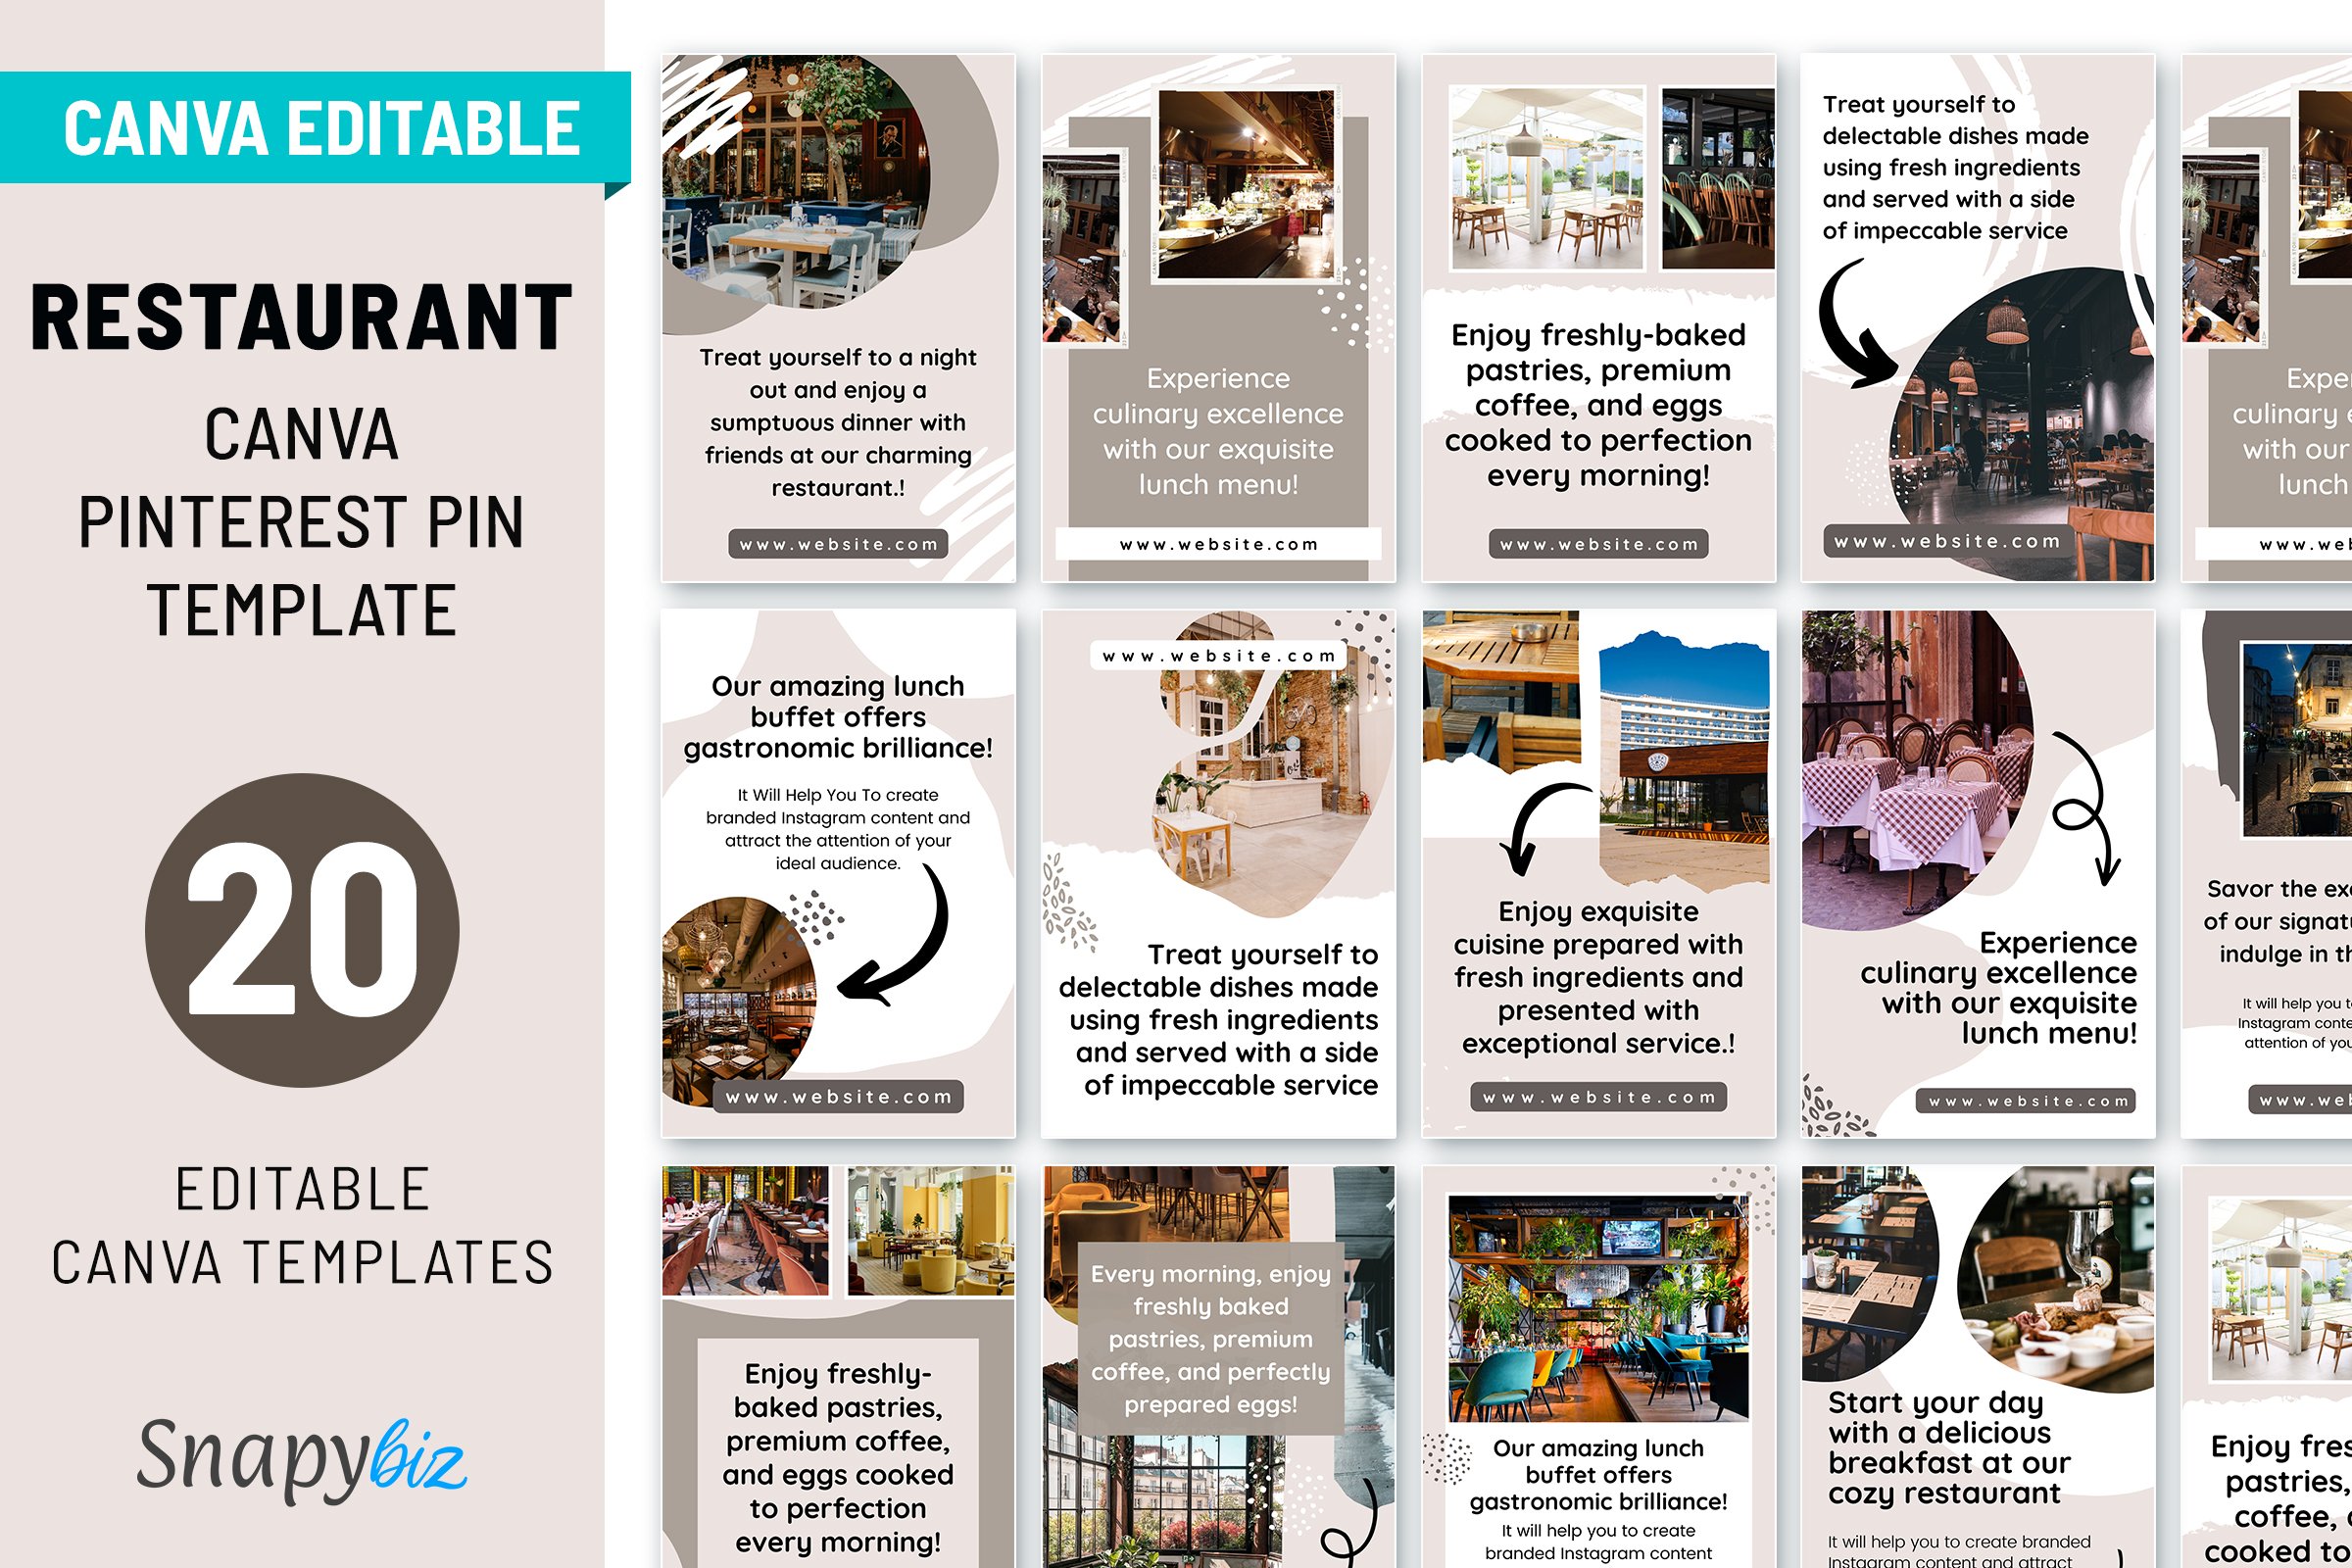 Restaurant Pinterest Pins Template cover image.